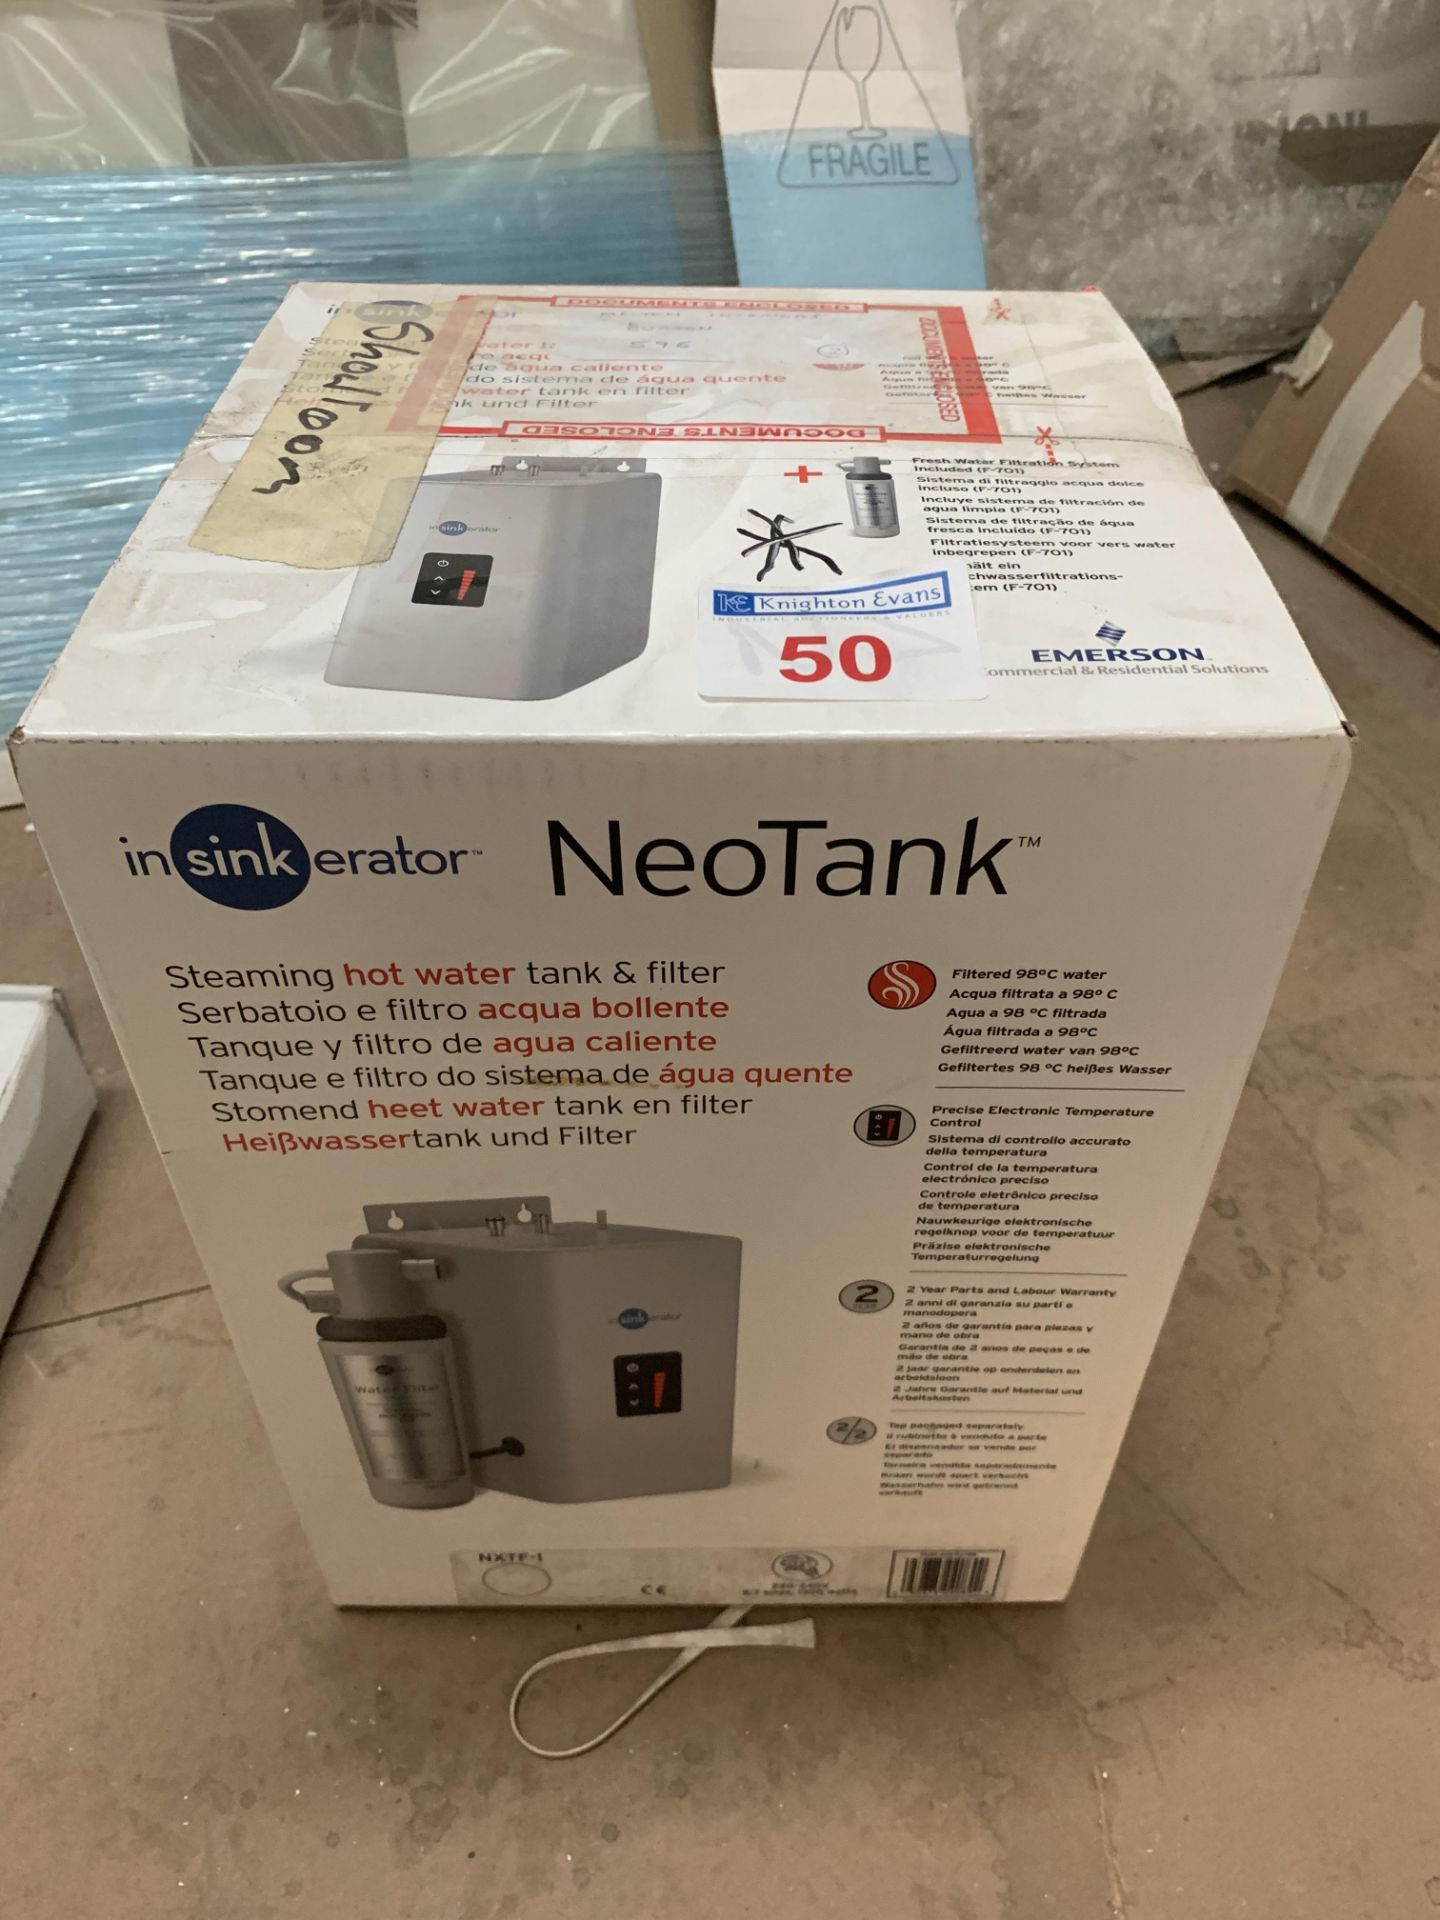 in sink erator Neo Tank